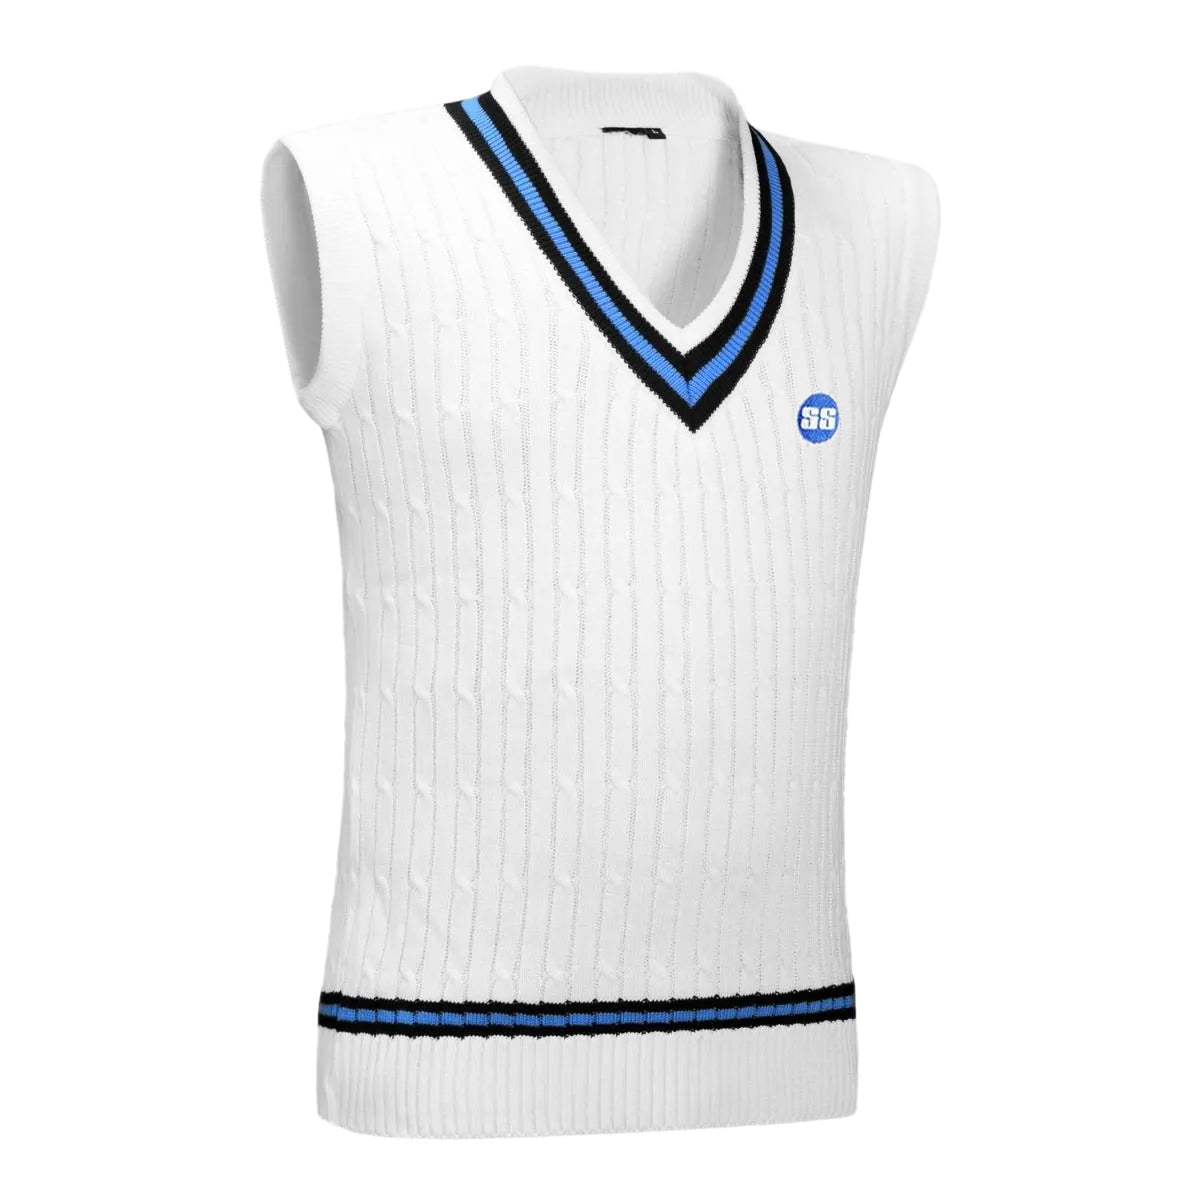 SS Professional Sleeveless Cricket Sweater - Best Price online Prokicksports.com